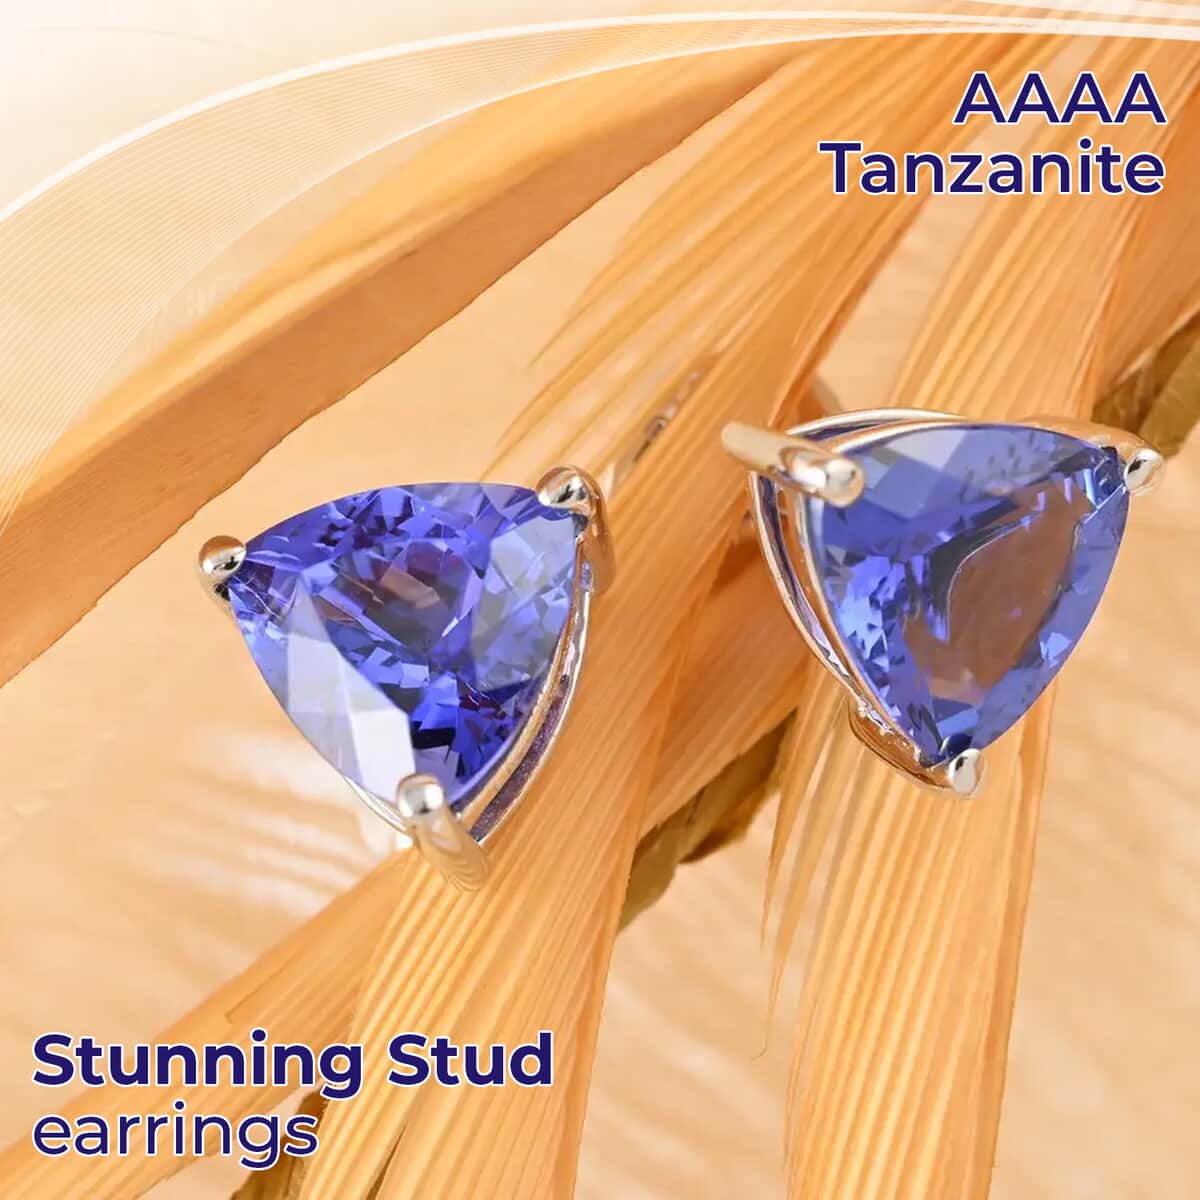 Rhapsody Certified & Appraised AAAA Tanzanite Solitaire Stud Earrings, 950 Platinum Earrings, Tanzanite Earrings, Tanzanite Jewelry For Her 2.40 ctw image number 1